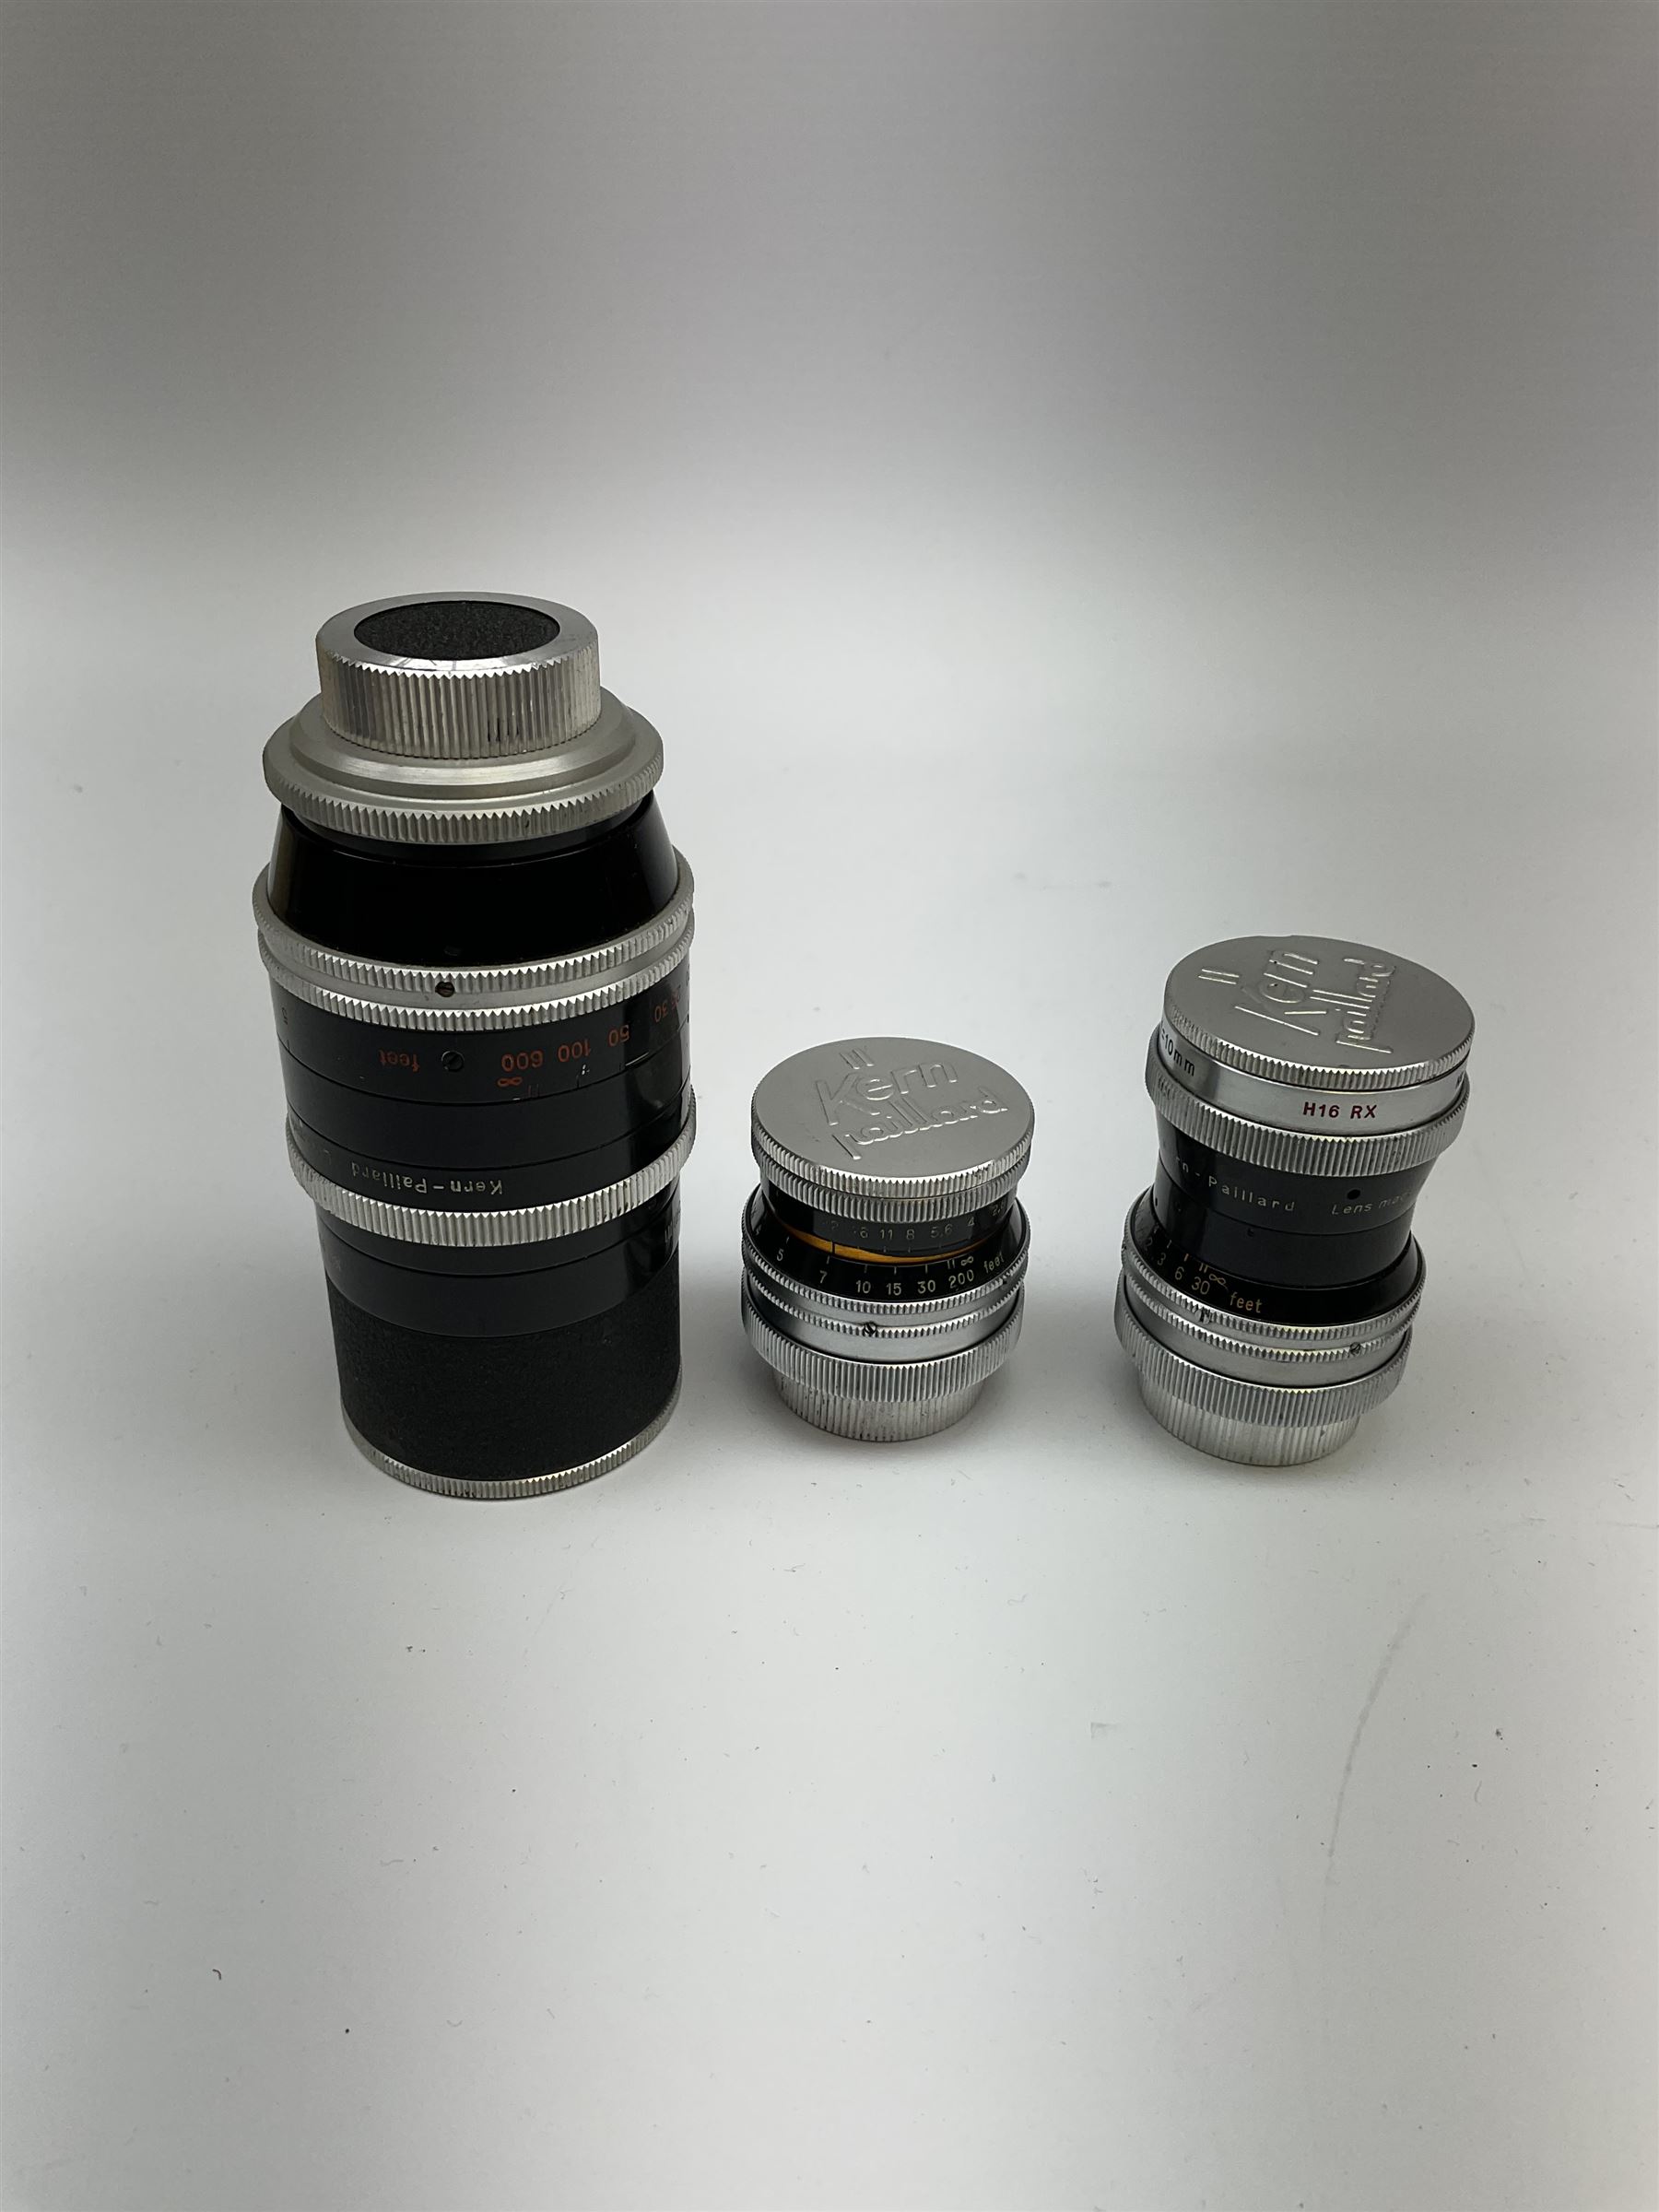 Paillard Bolex H16 Reflex 16mm cine camera with handgrip and turret for interchangeable lenses - Image 3 of 15